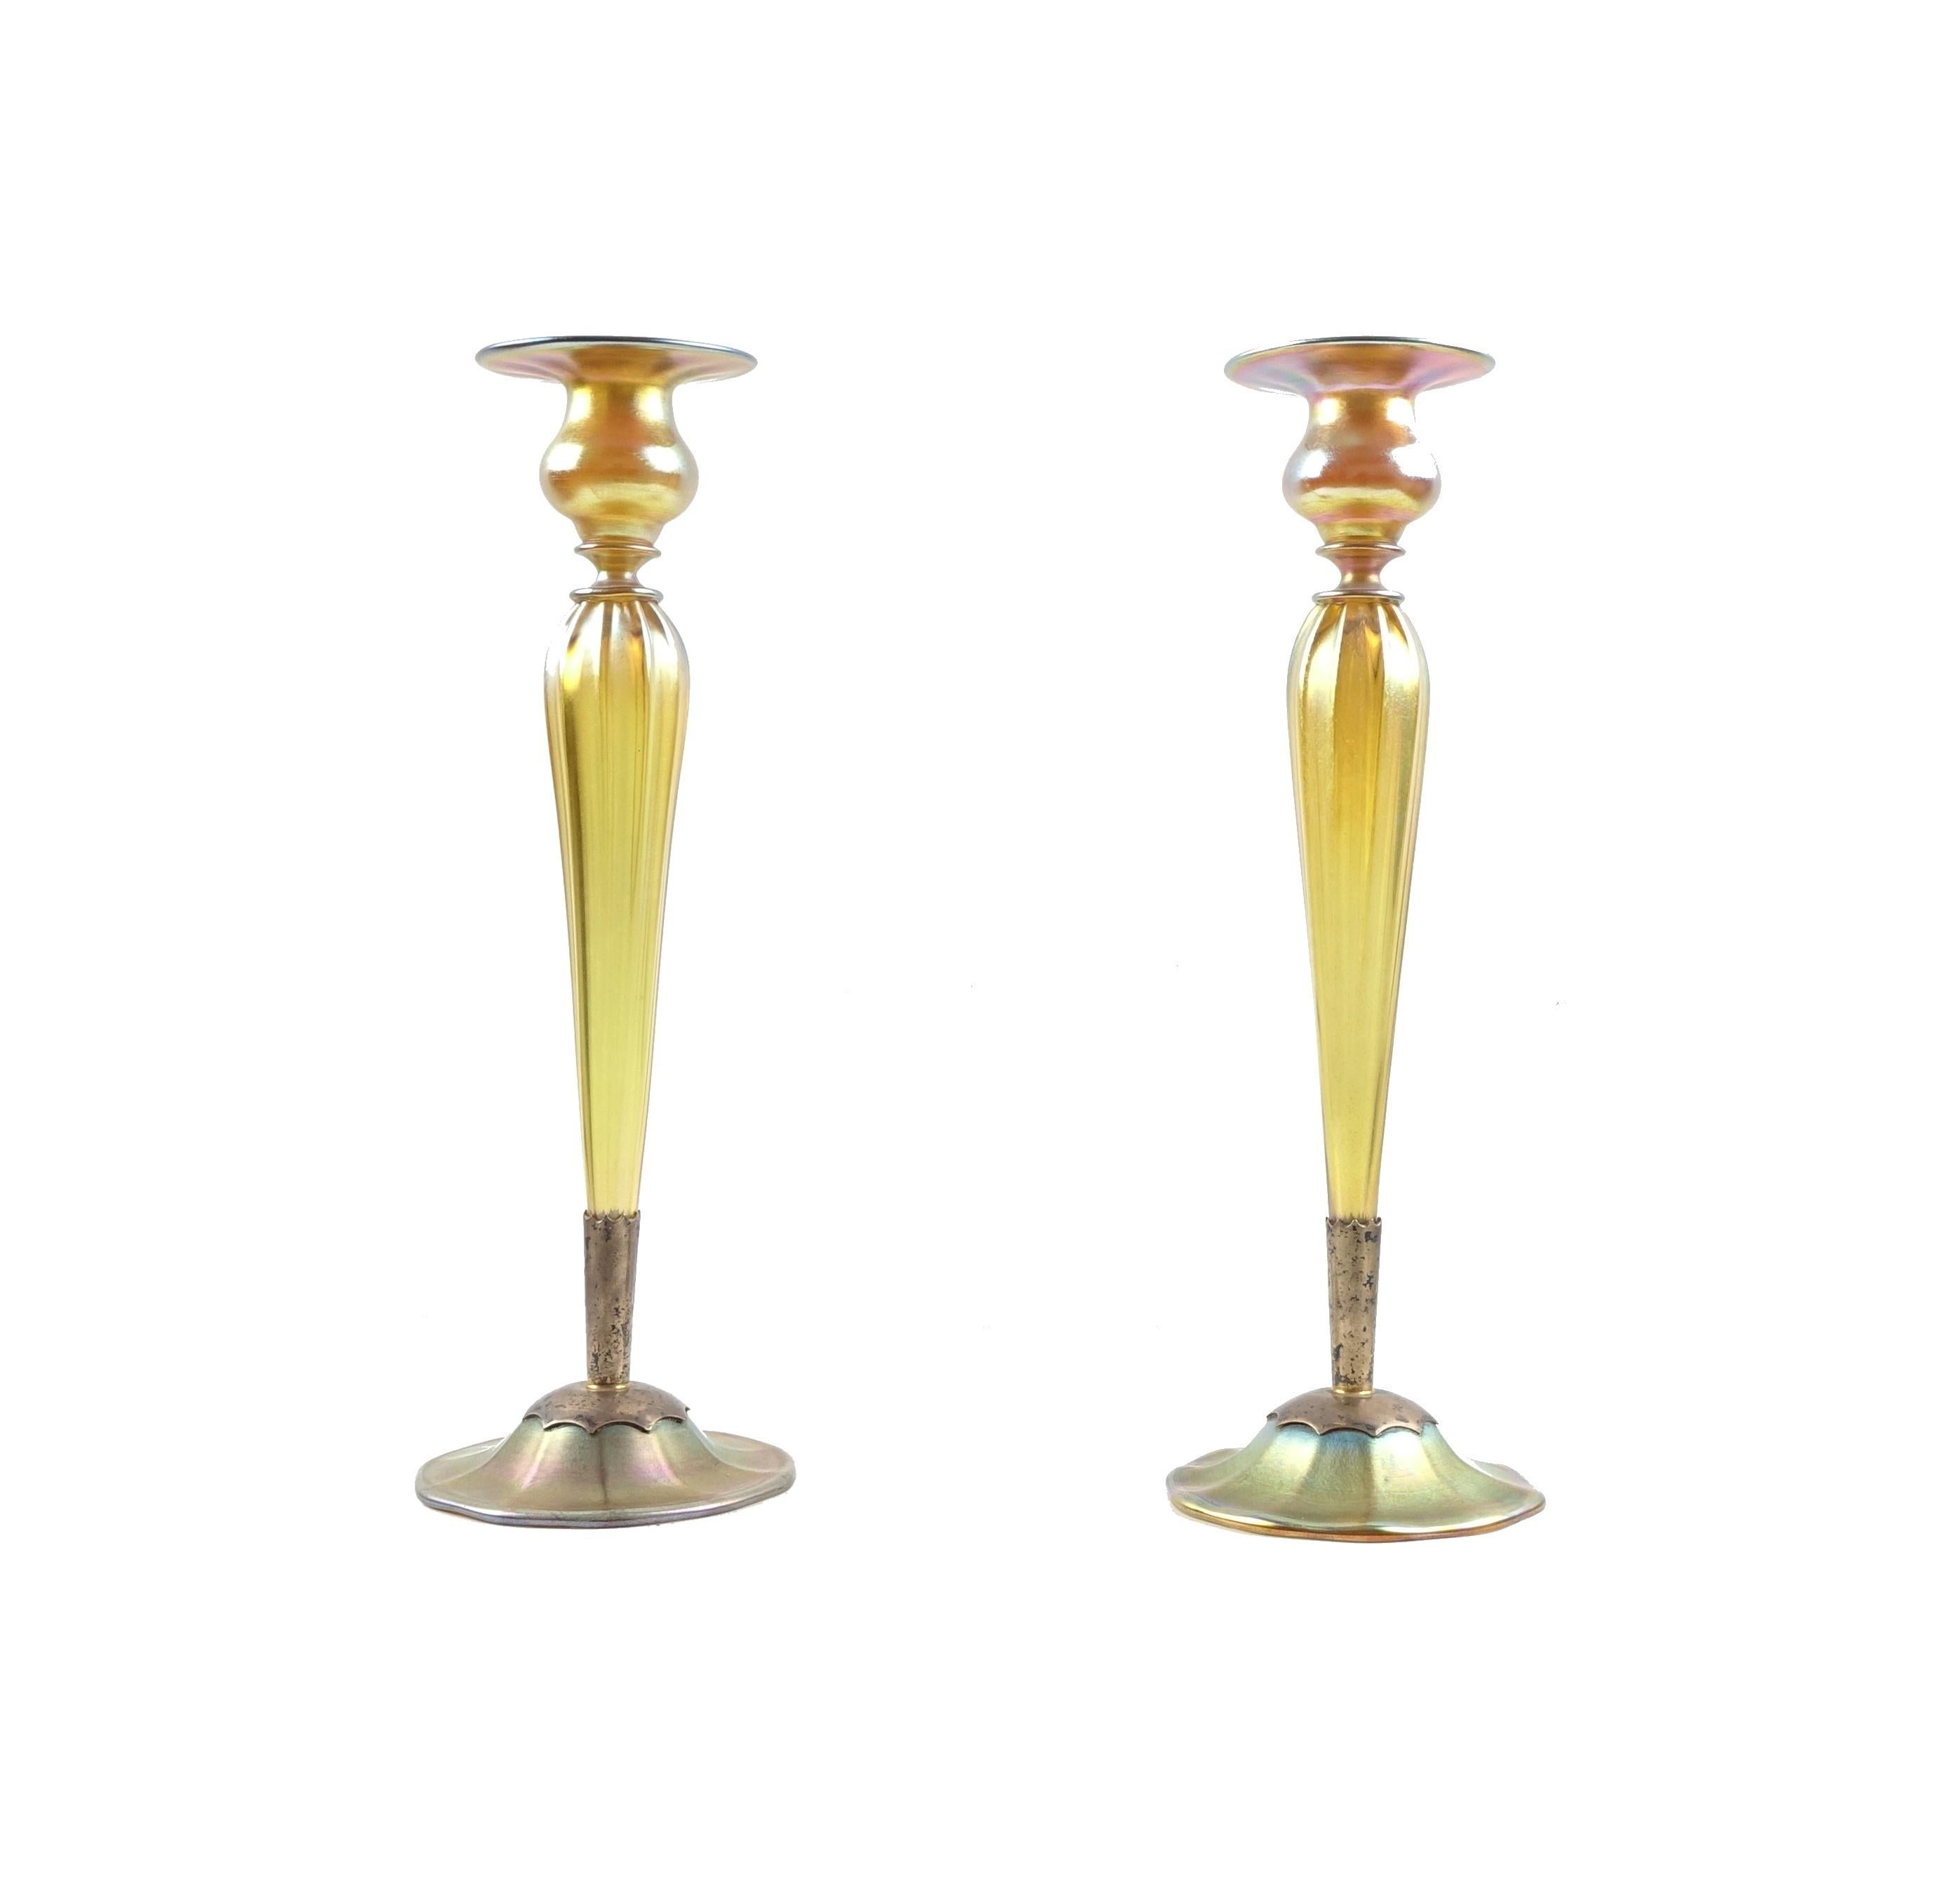 Candlesticks in iridescent glass signed tiffany
Tiffany colored glass candlesticks
Measurements: diameter 10 cm height 30 cm.
 